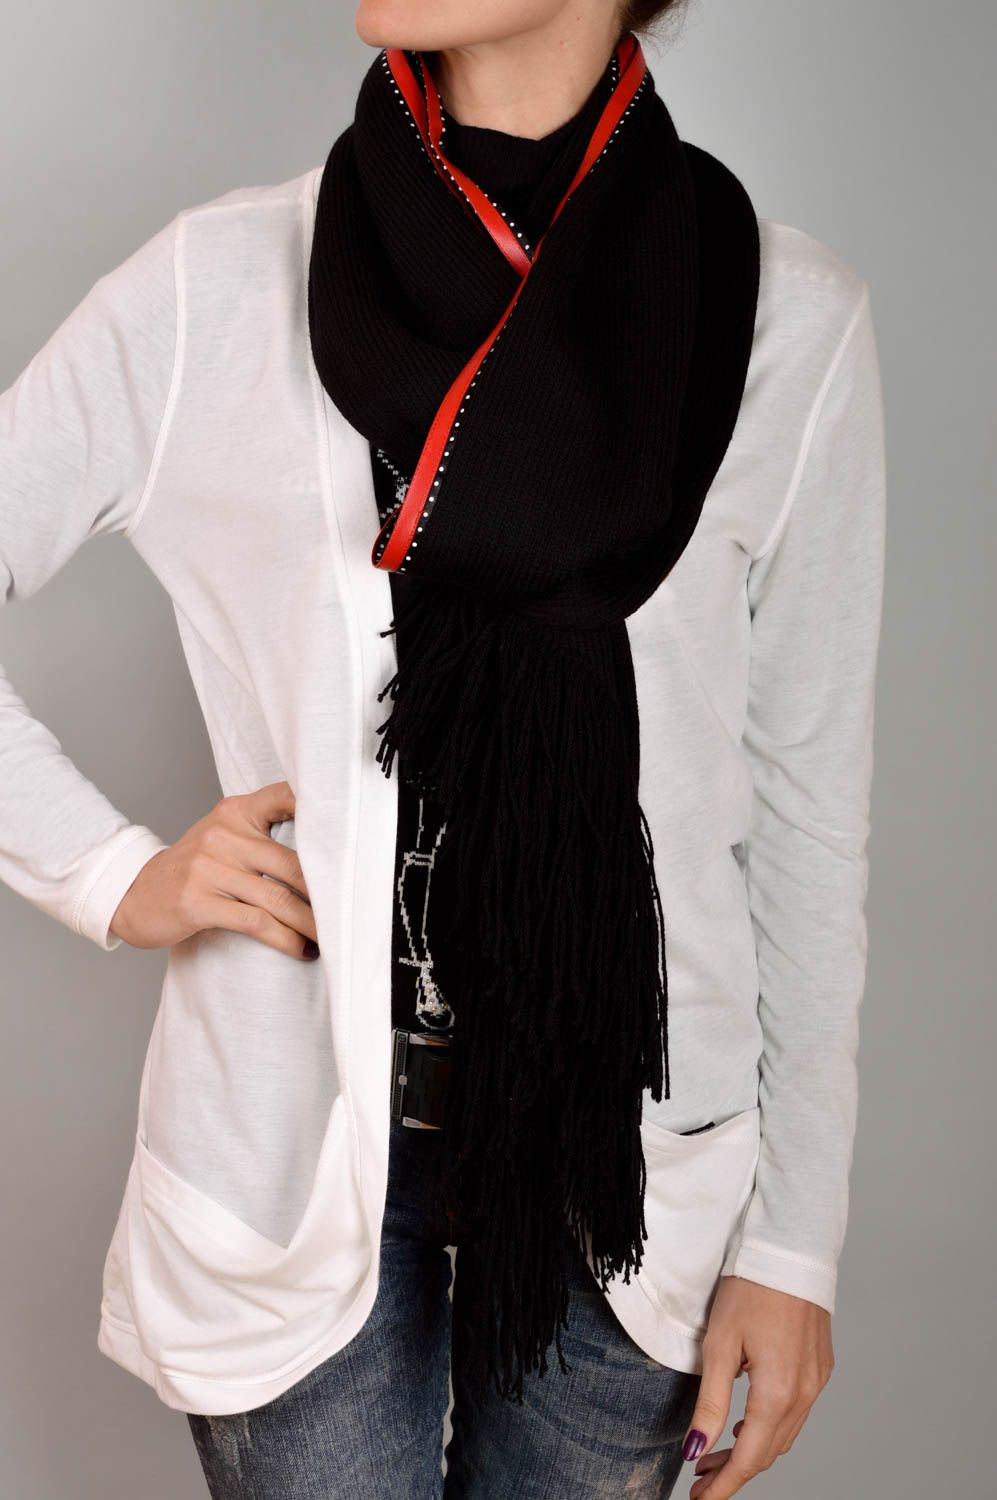 Damen Schal handgefertigt Winter Accessoires Damen Frauen Geschenk schwarz rot foto 4